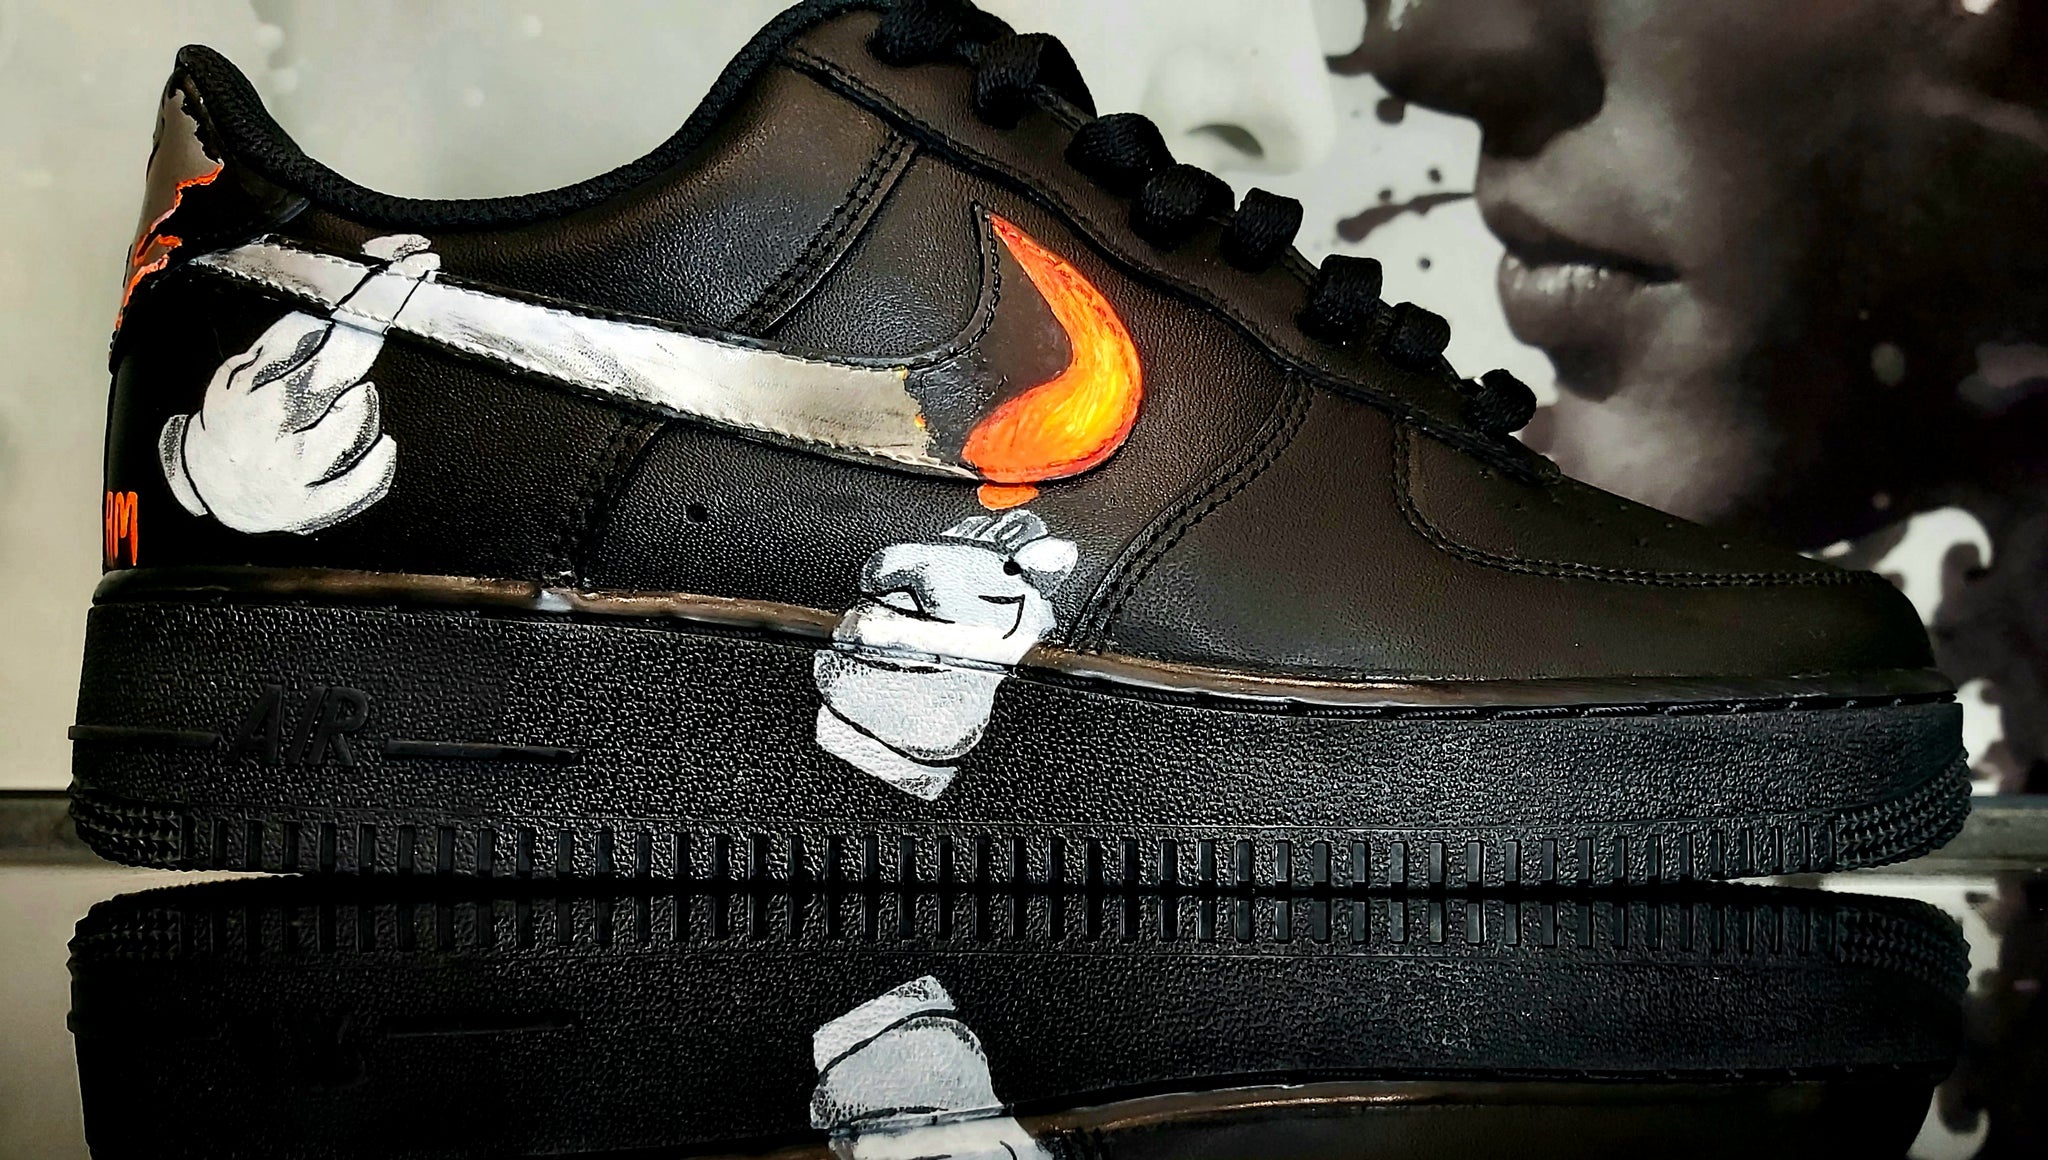 Nike af1custom SMOKE